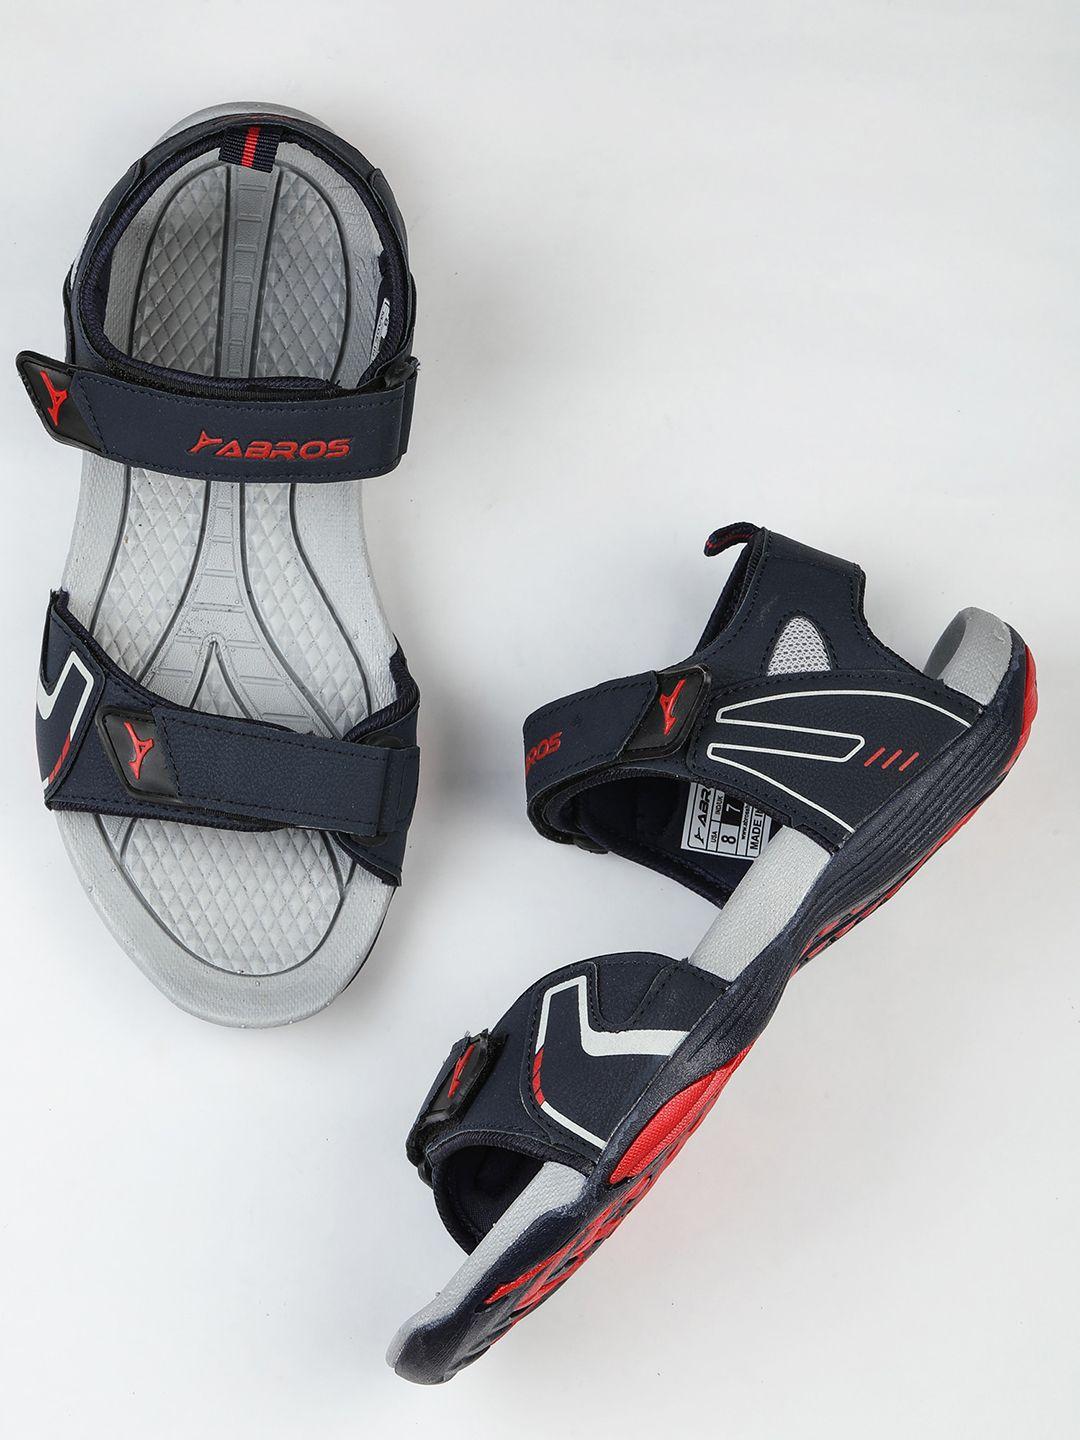 abros-men-navy-blue-solid-sports-sandals